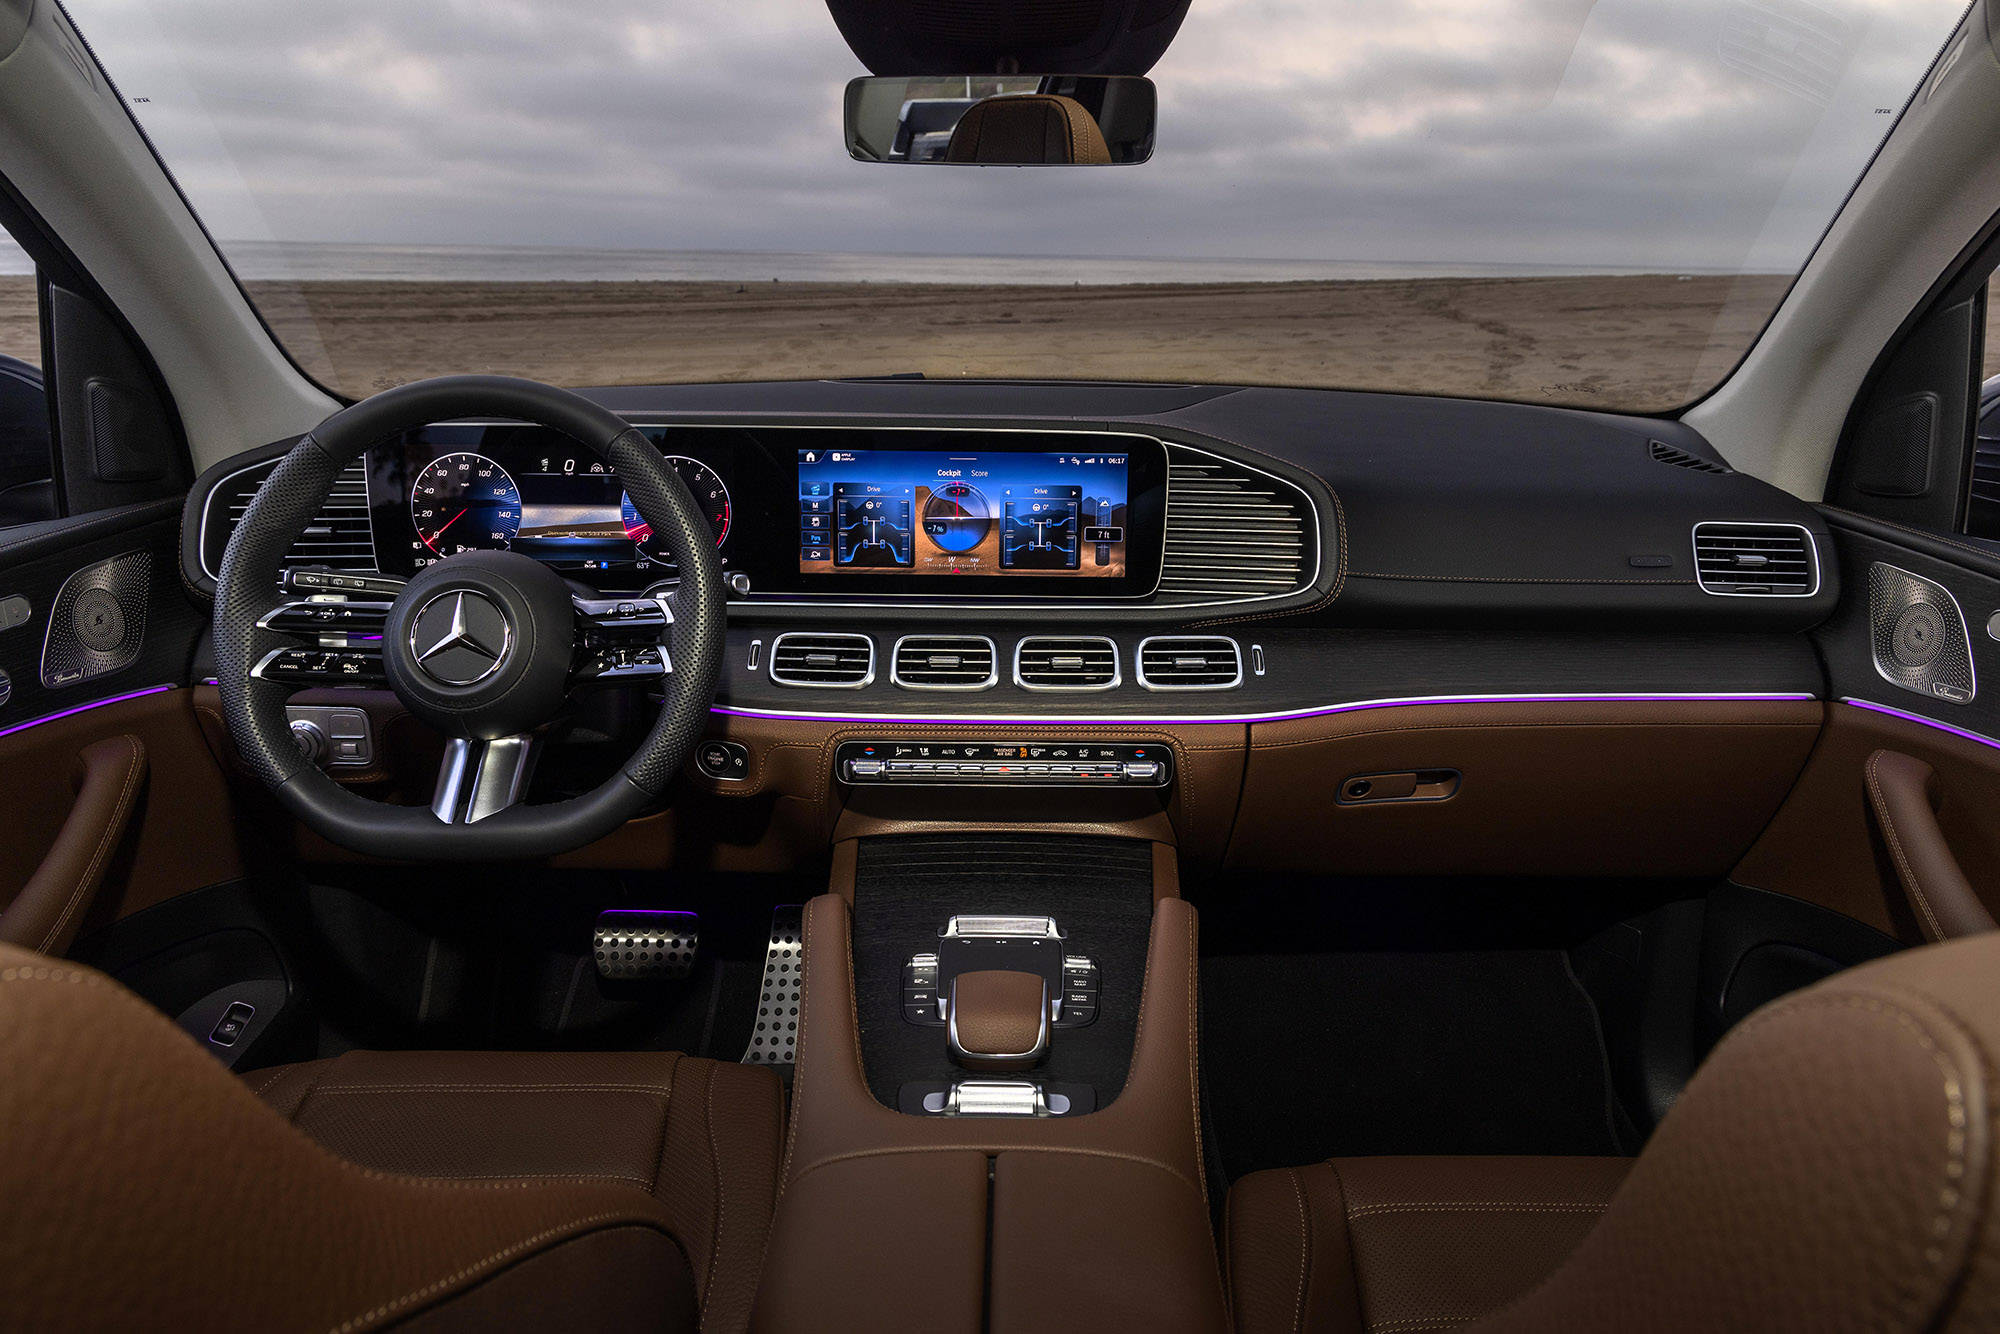 2023 Mercedes-Benz GLS 450 4Matic interior in brown